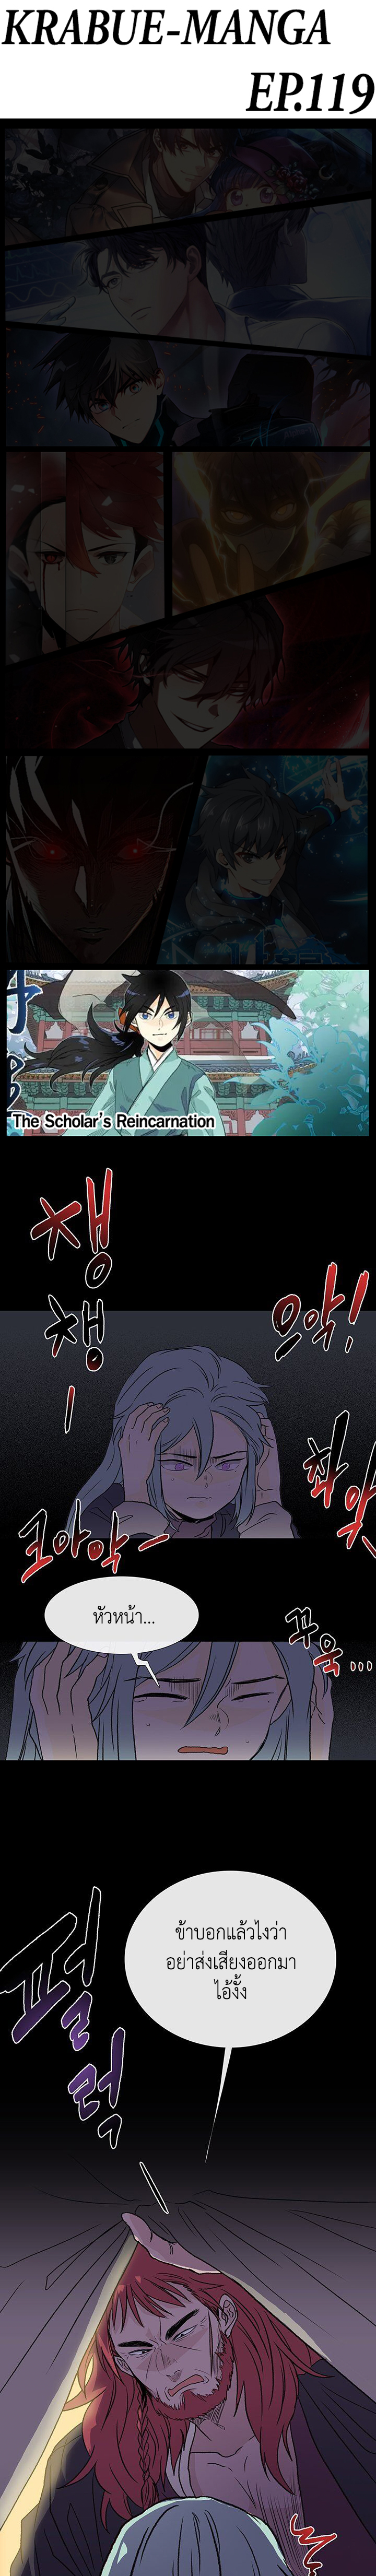 The Scholar’s Reincarnation119 (1)